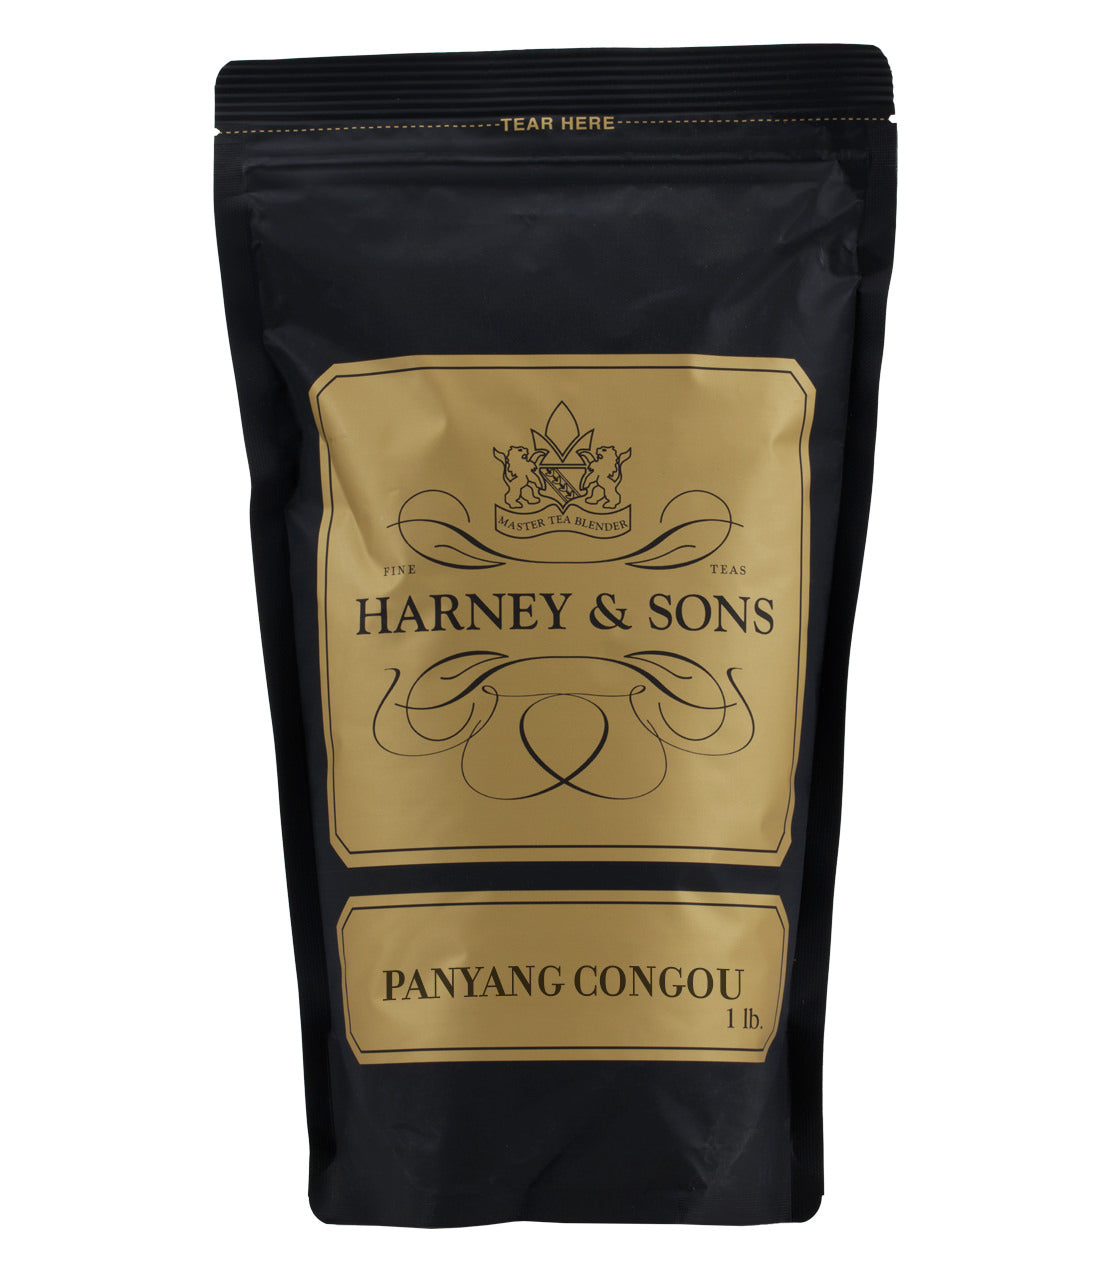 Panyang Congou - Loose 1 lb. Bag - Harney & Sons Fine Teas